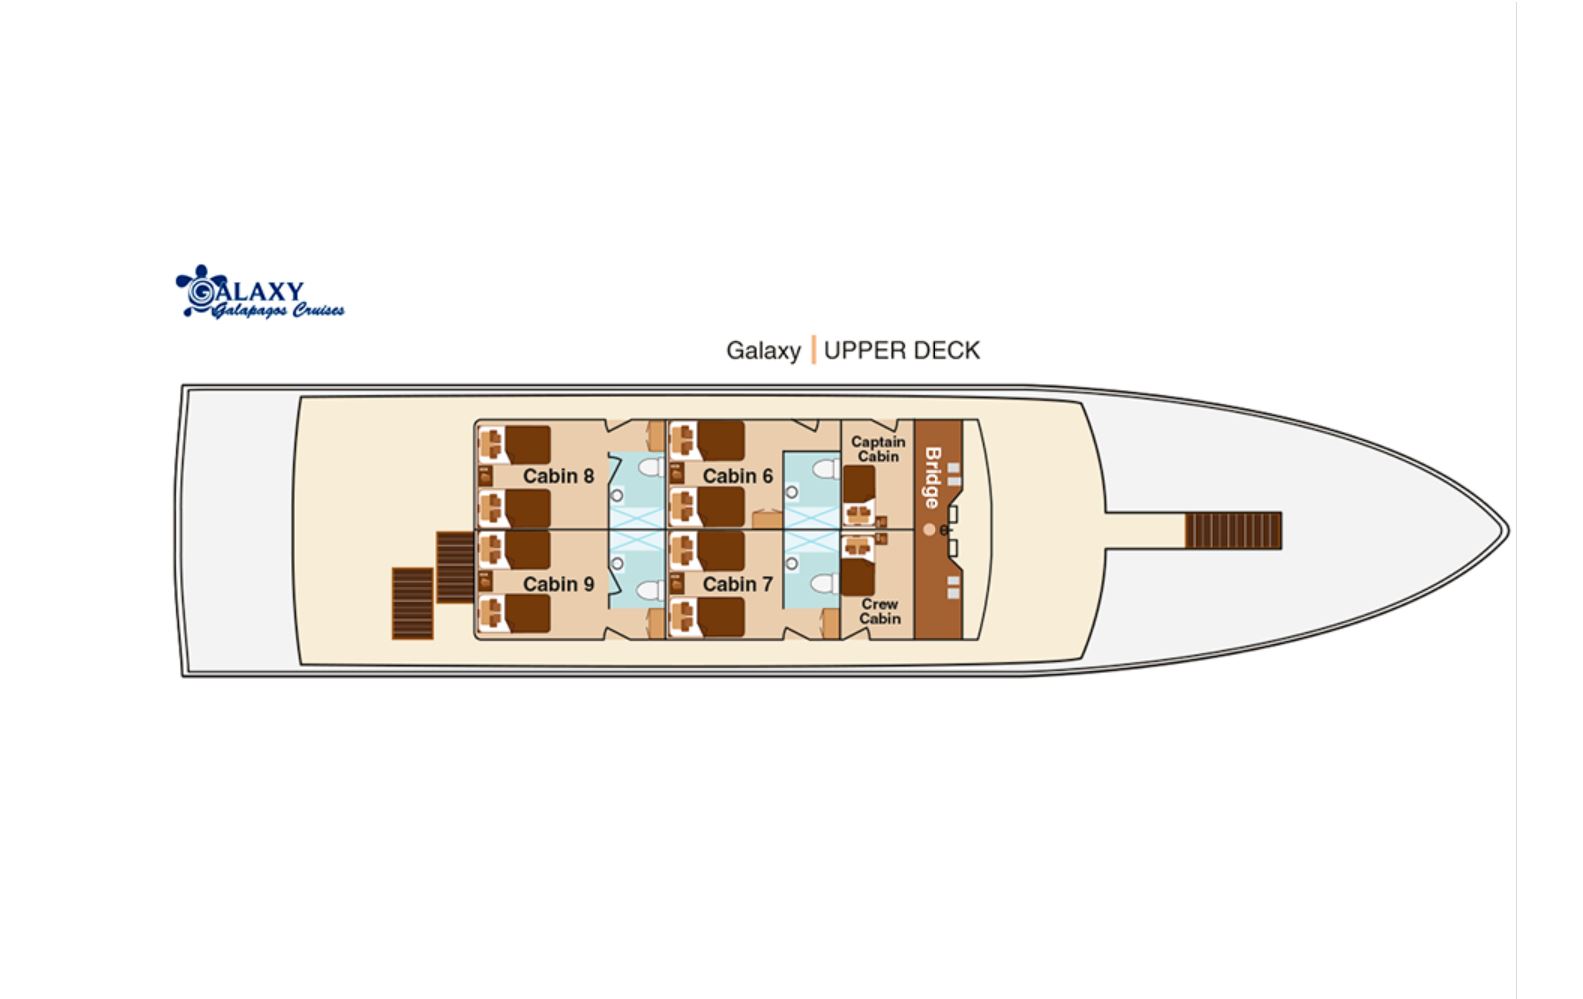 Galaxy Touristclass -Superior Motoryacht: Galaxy Touristclass-Superior Yacht 5 days/4 nights cruise